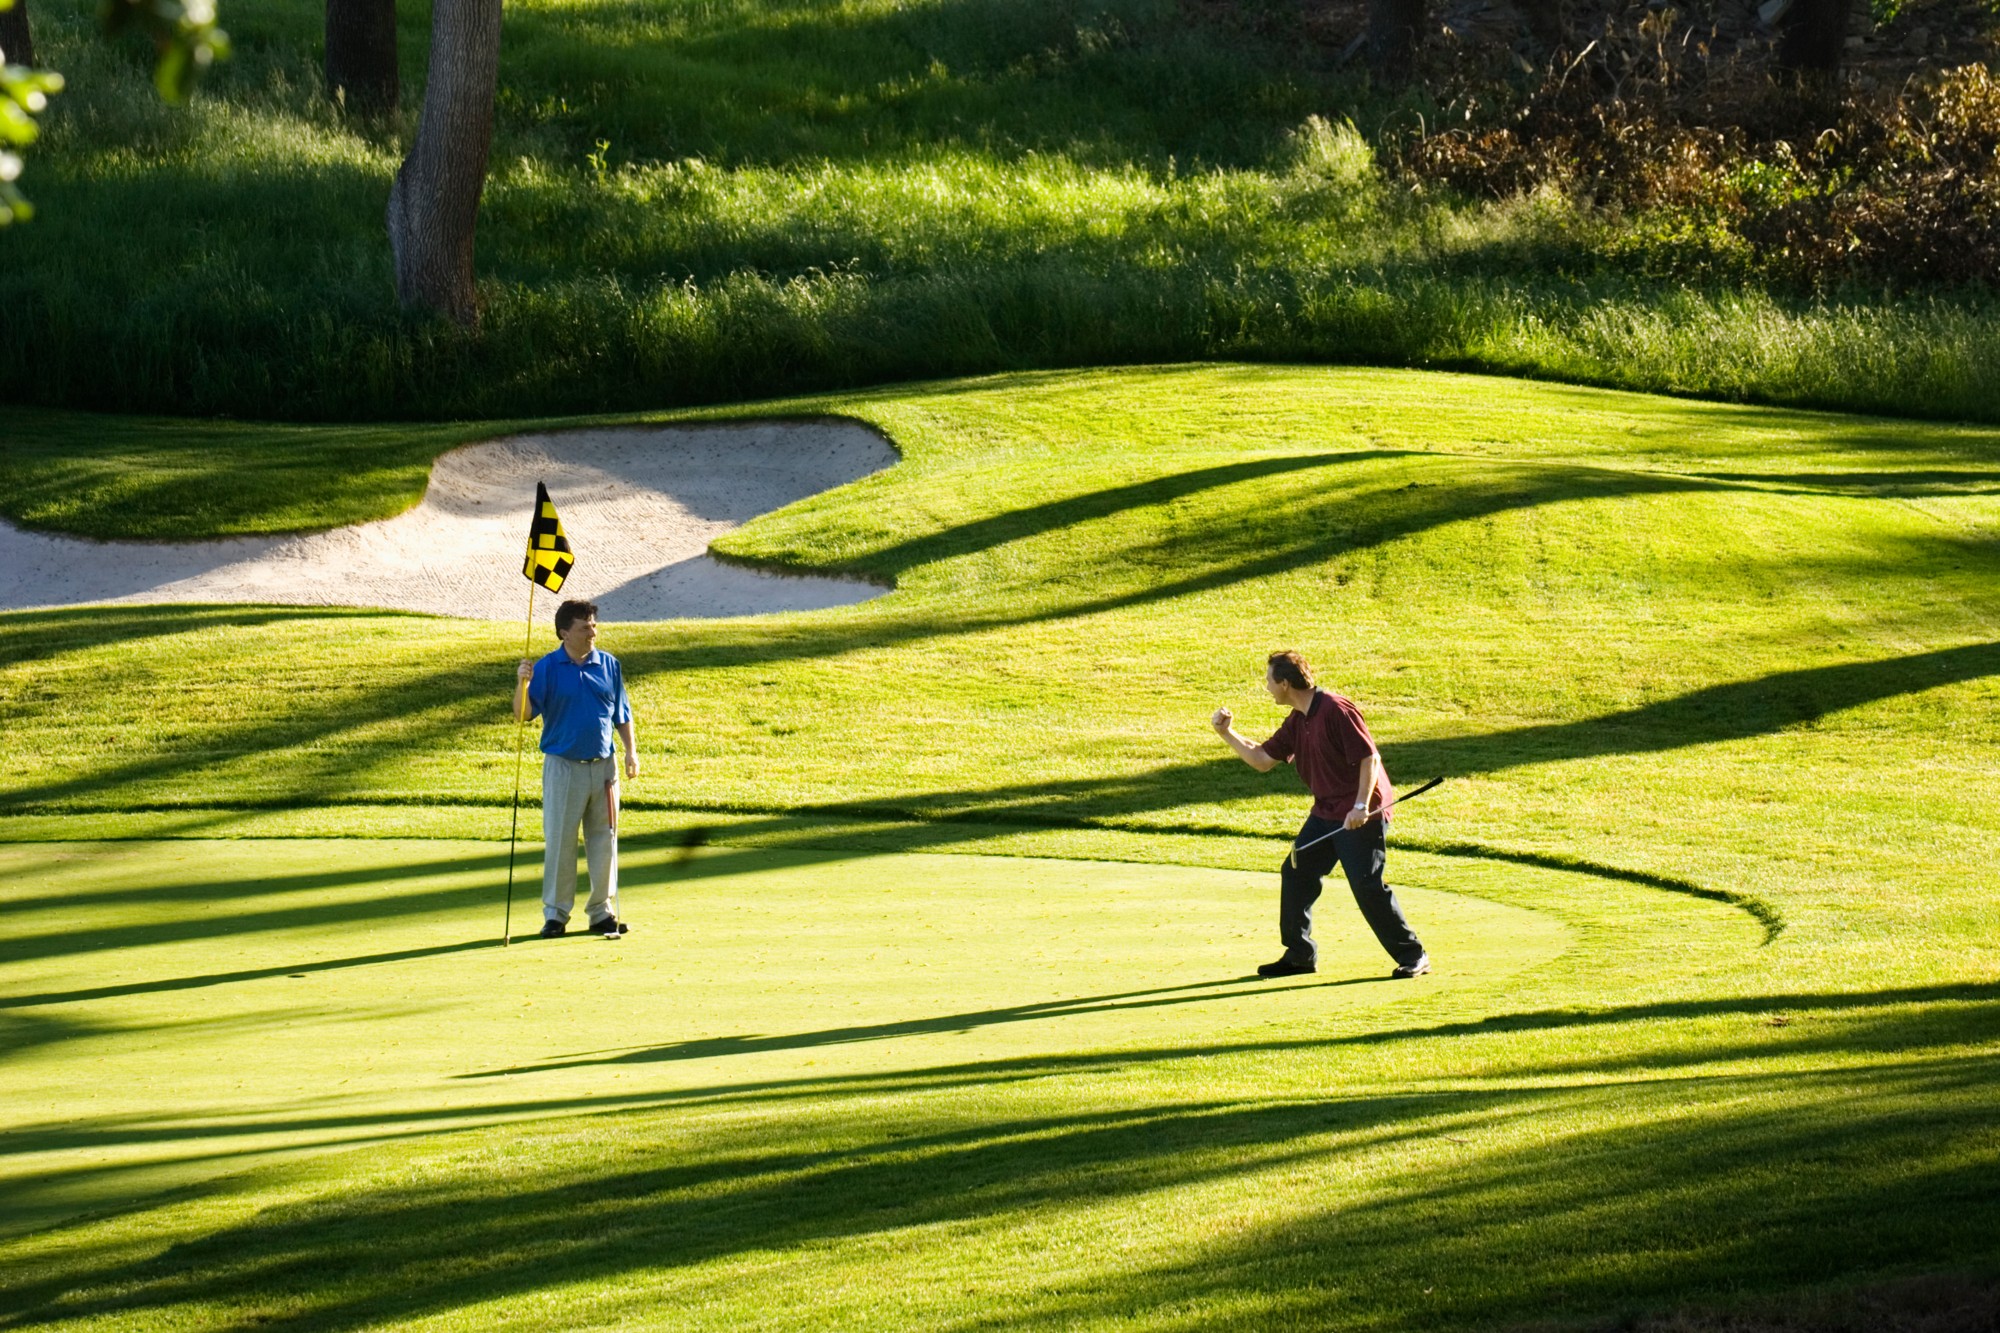 Golfer celebrating shot while partner holds flagstick - stock photo